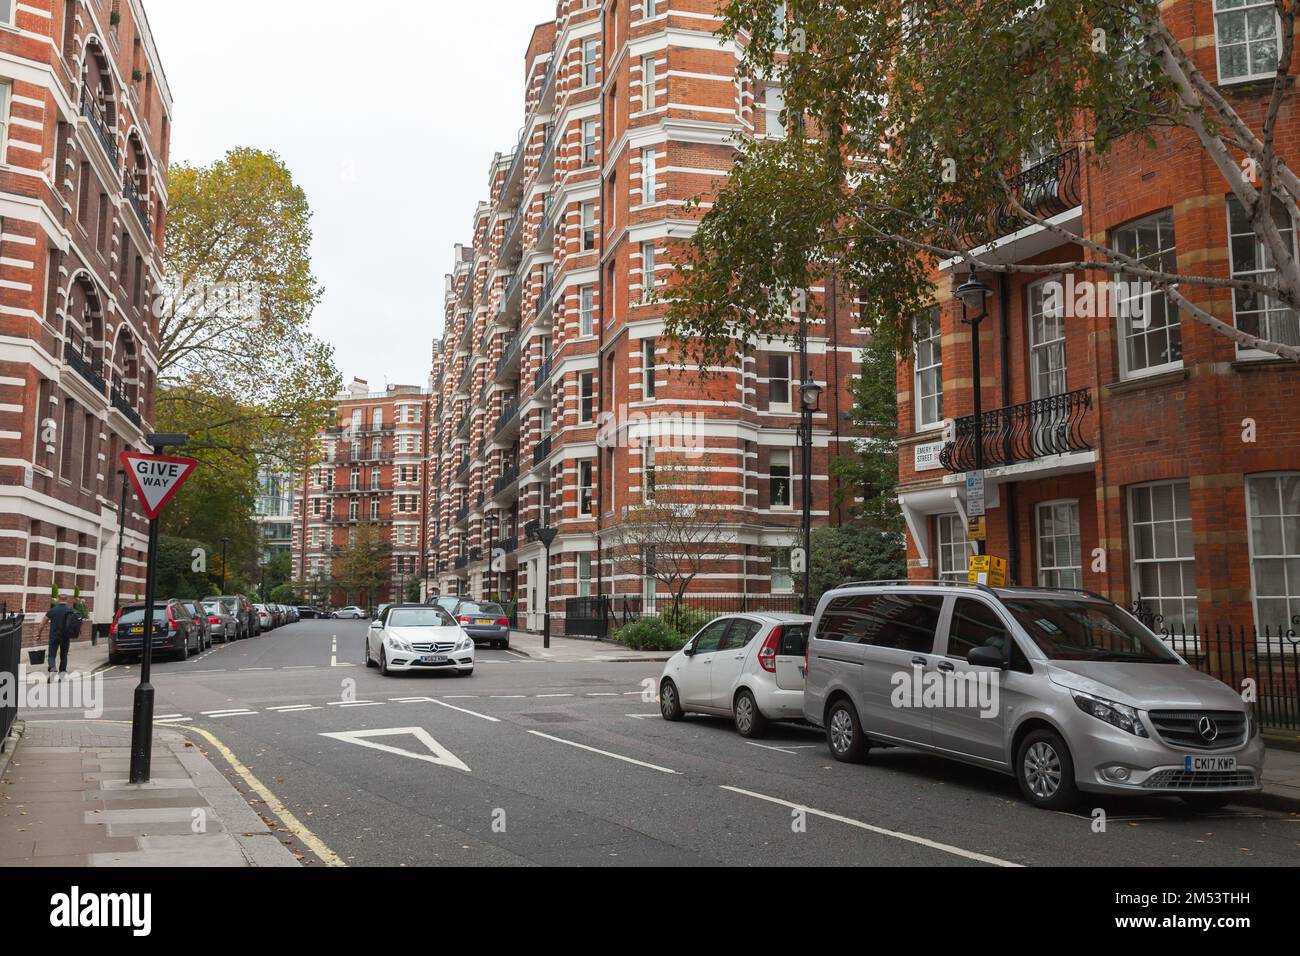 London, United Kingdom - October 31, 2017: London Street view, people walk the street near parked cars Stock Photo